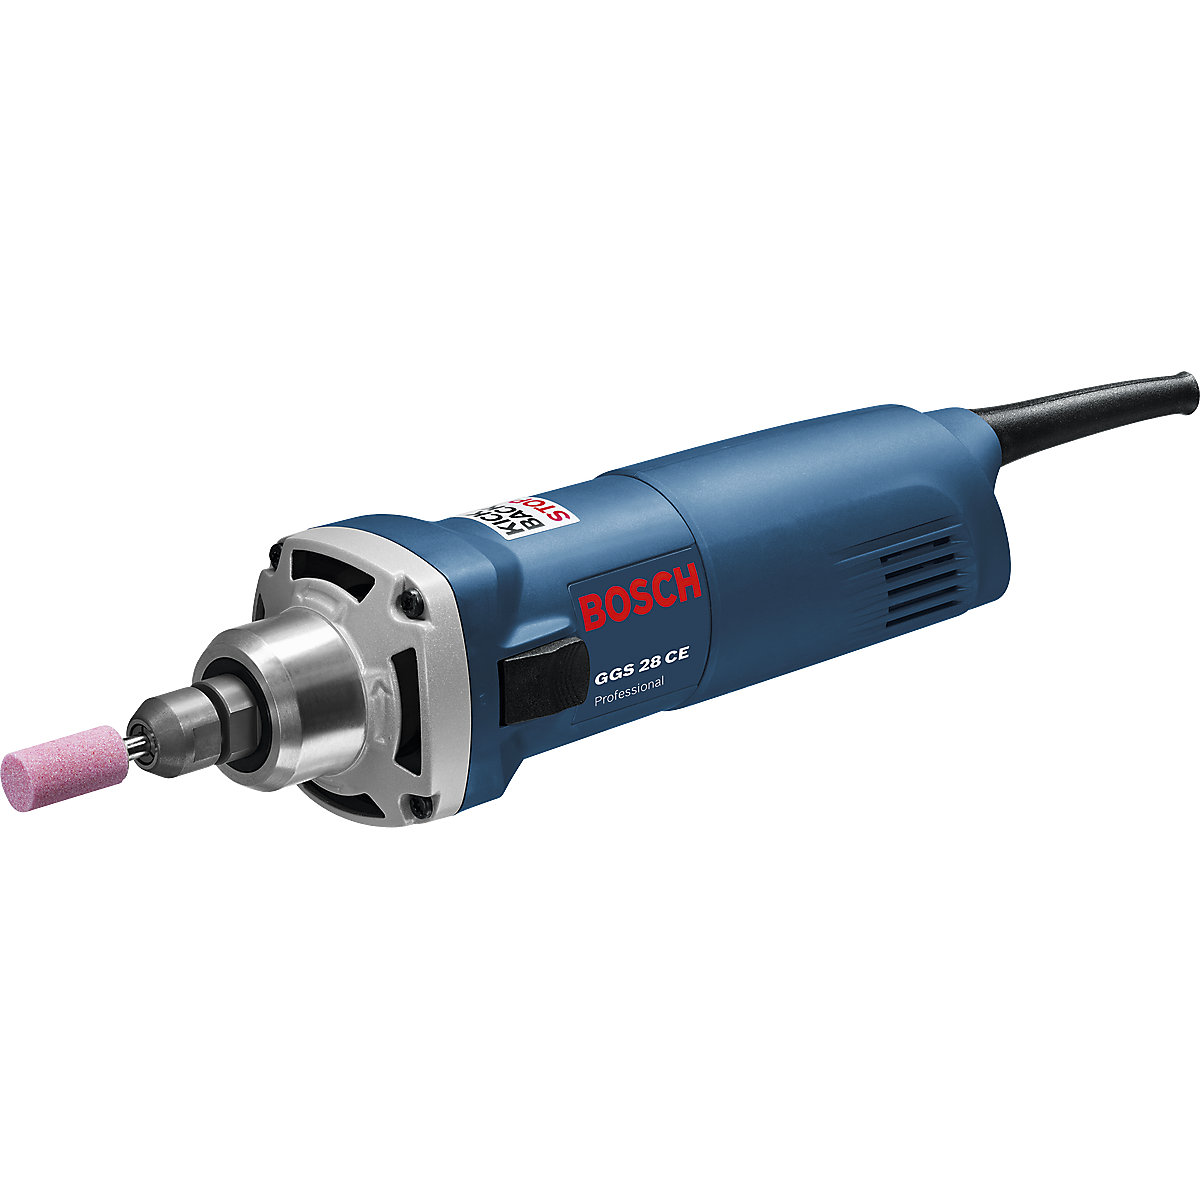 GGS 28 CE Professional straight grinder - Bosch